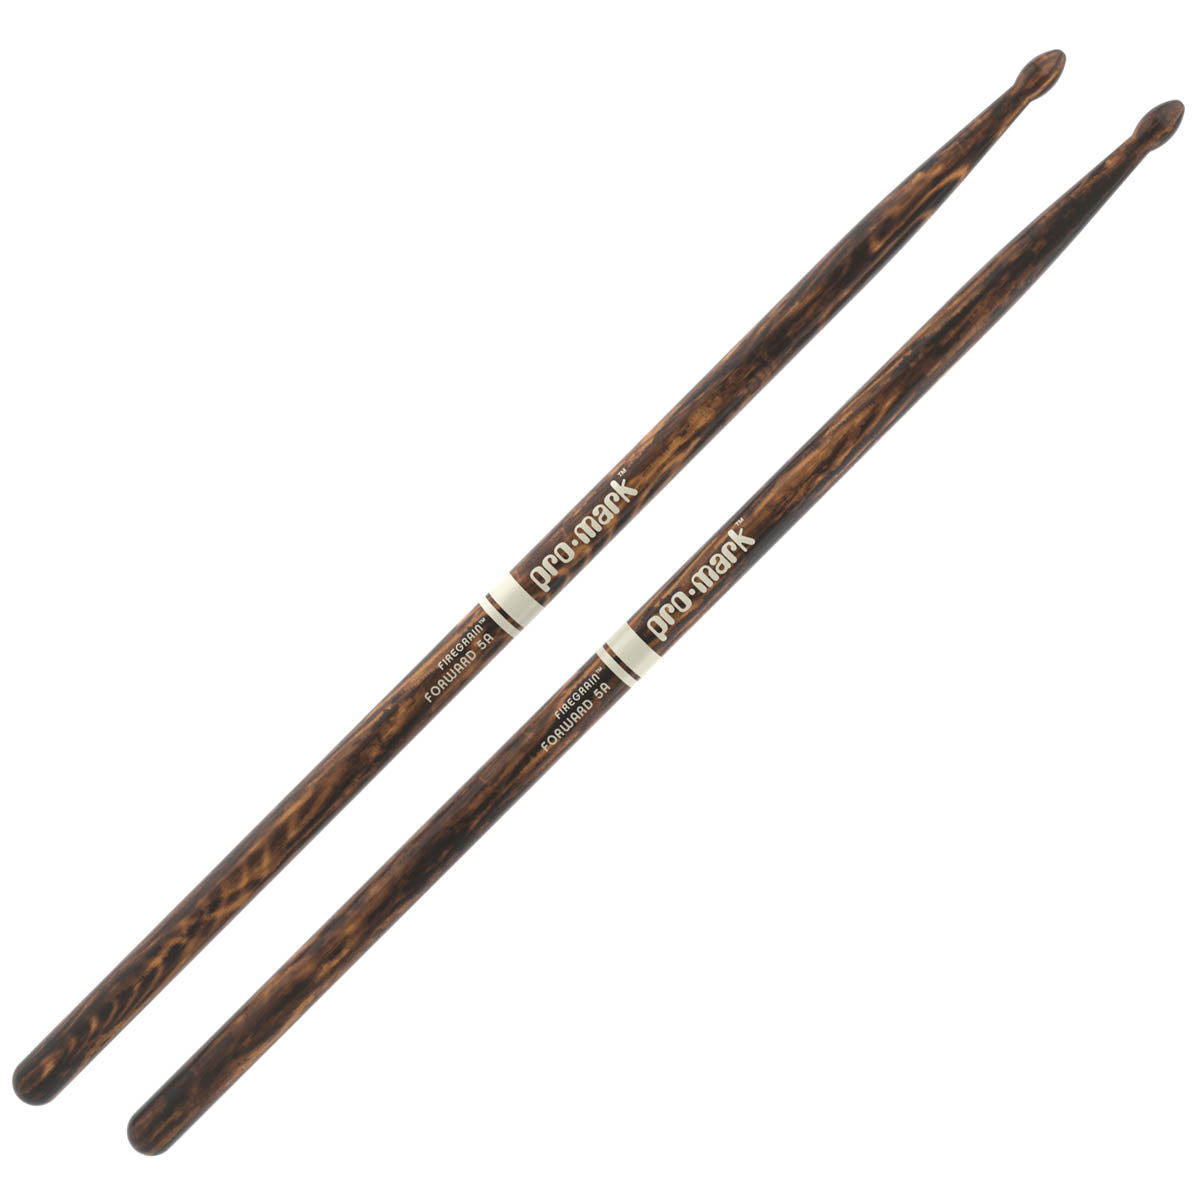 Pro-Mark Classic 5A FireGrain Hickory Drum Sticks - Wood Tip